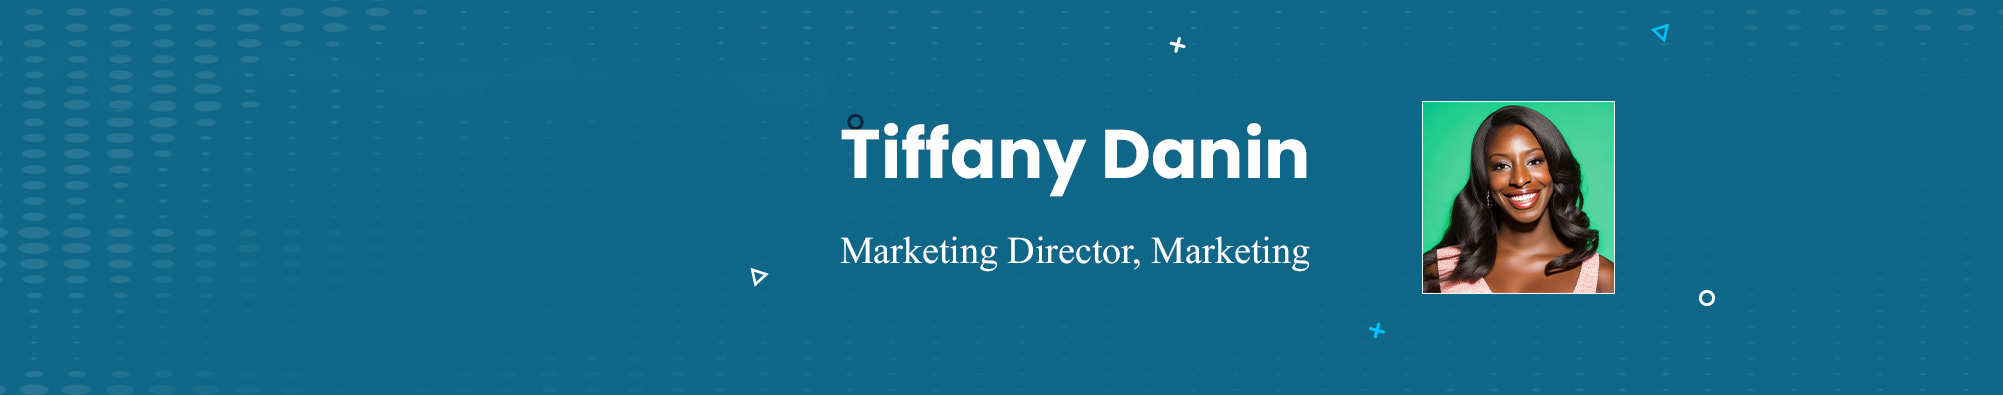 Tiffany Danin's profile banner